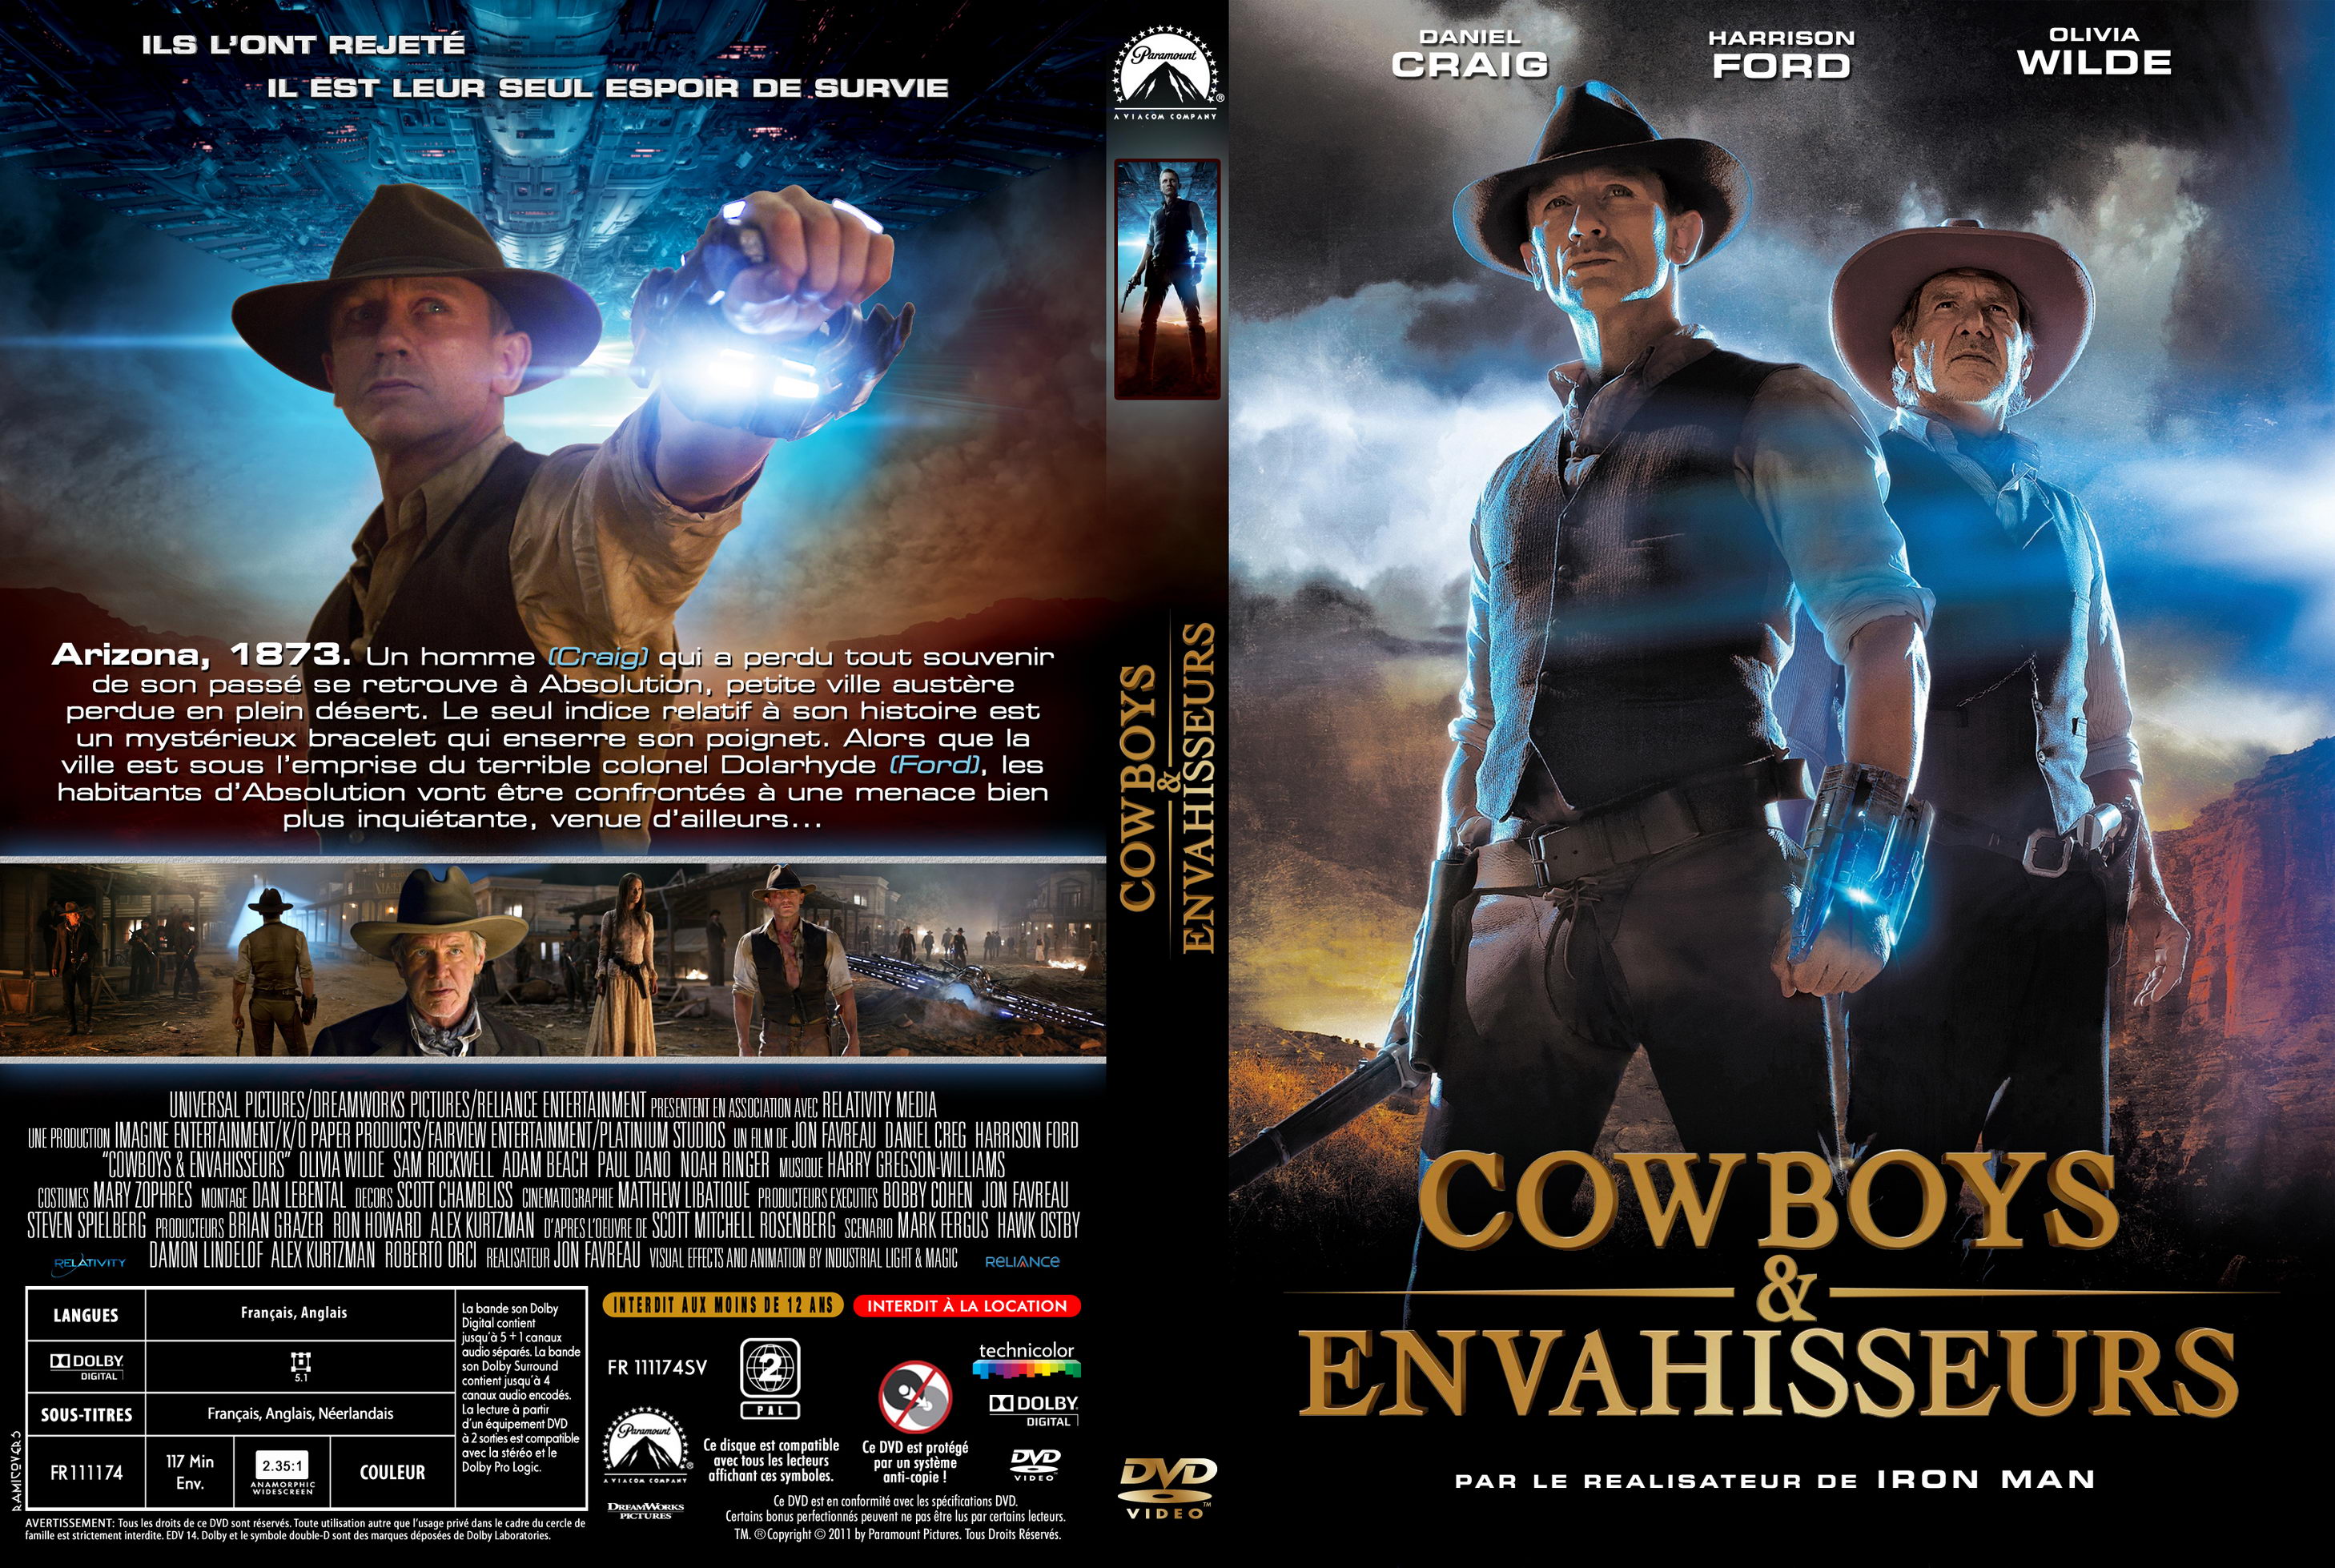 Jaquette DVD Cowboys & Envahisseurs custom v2